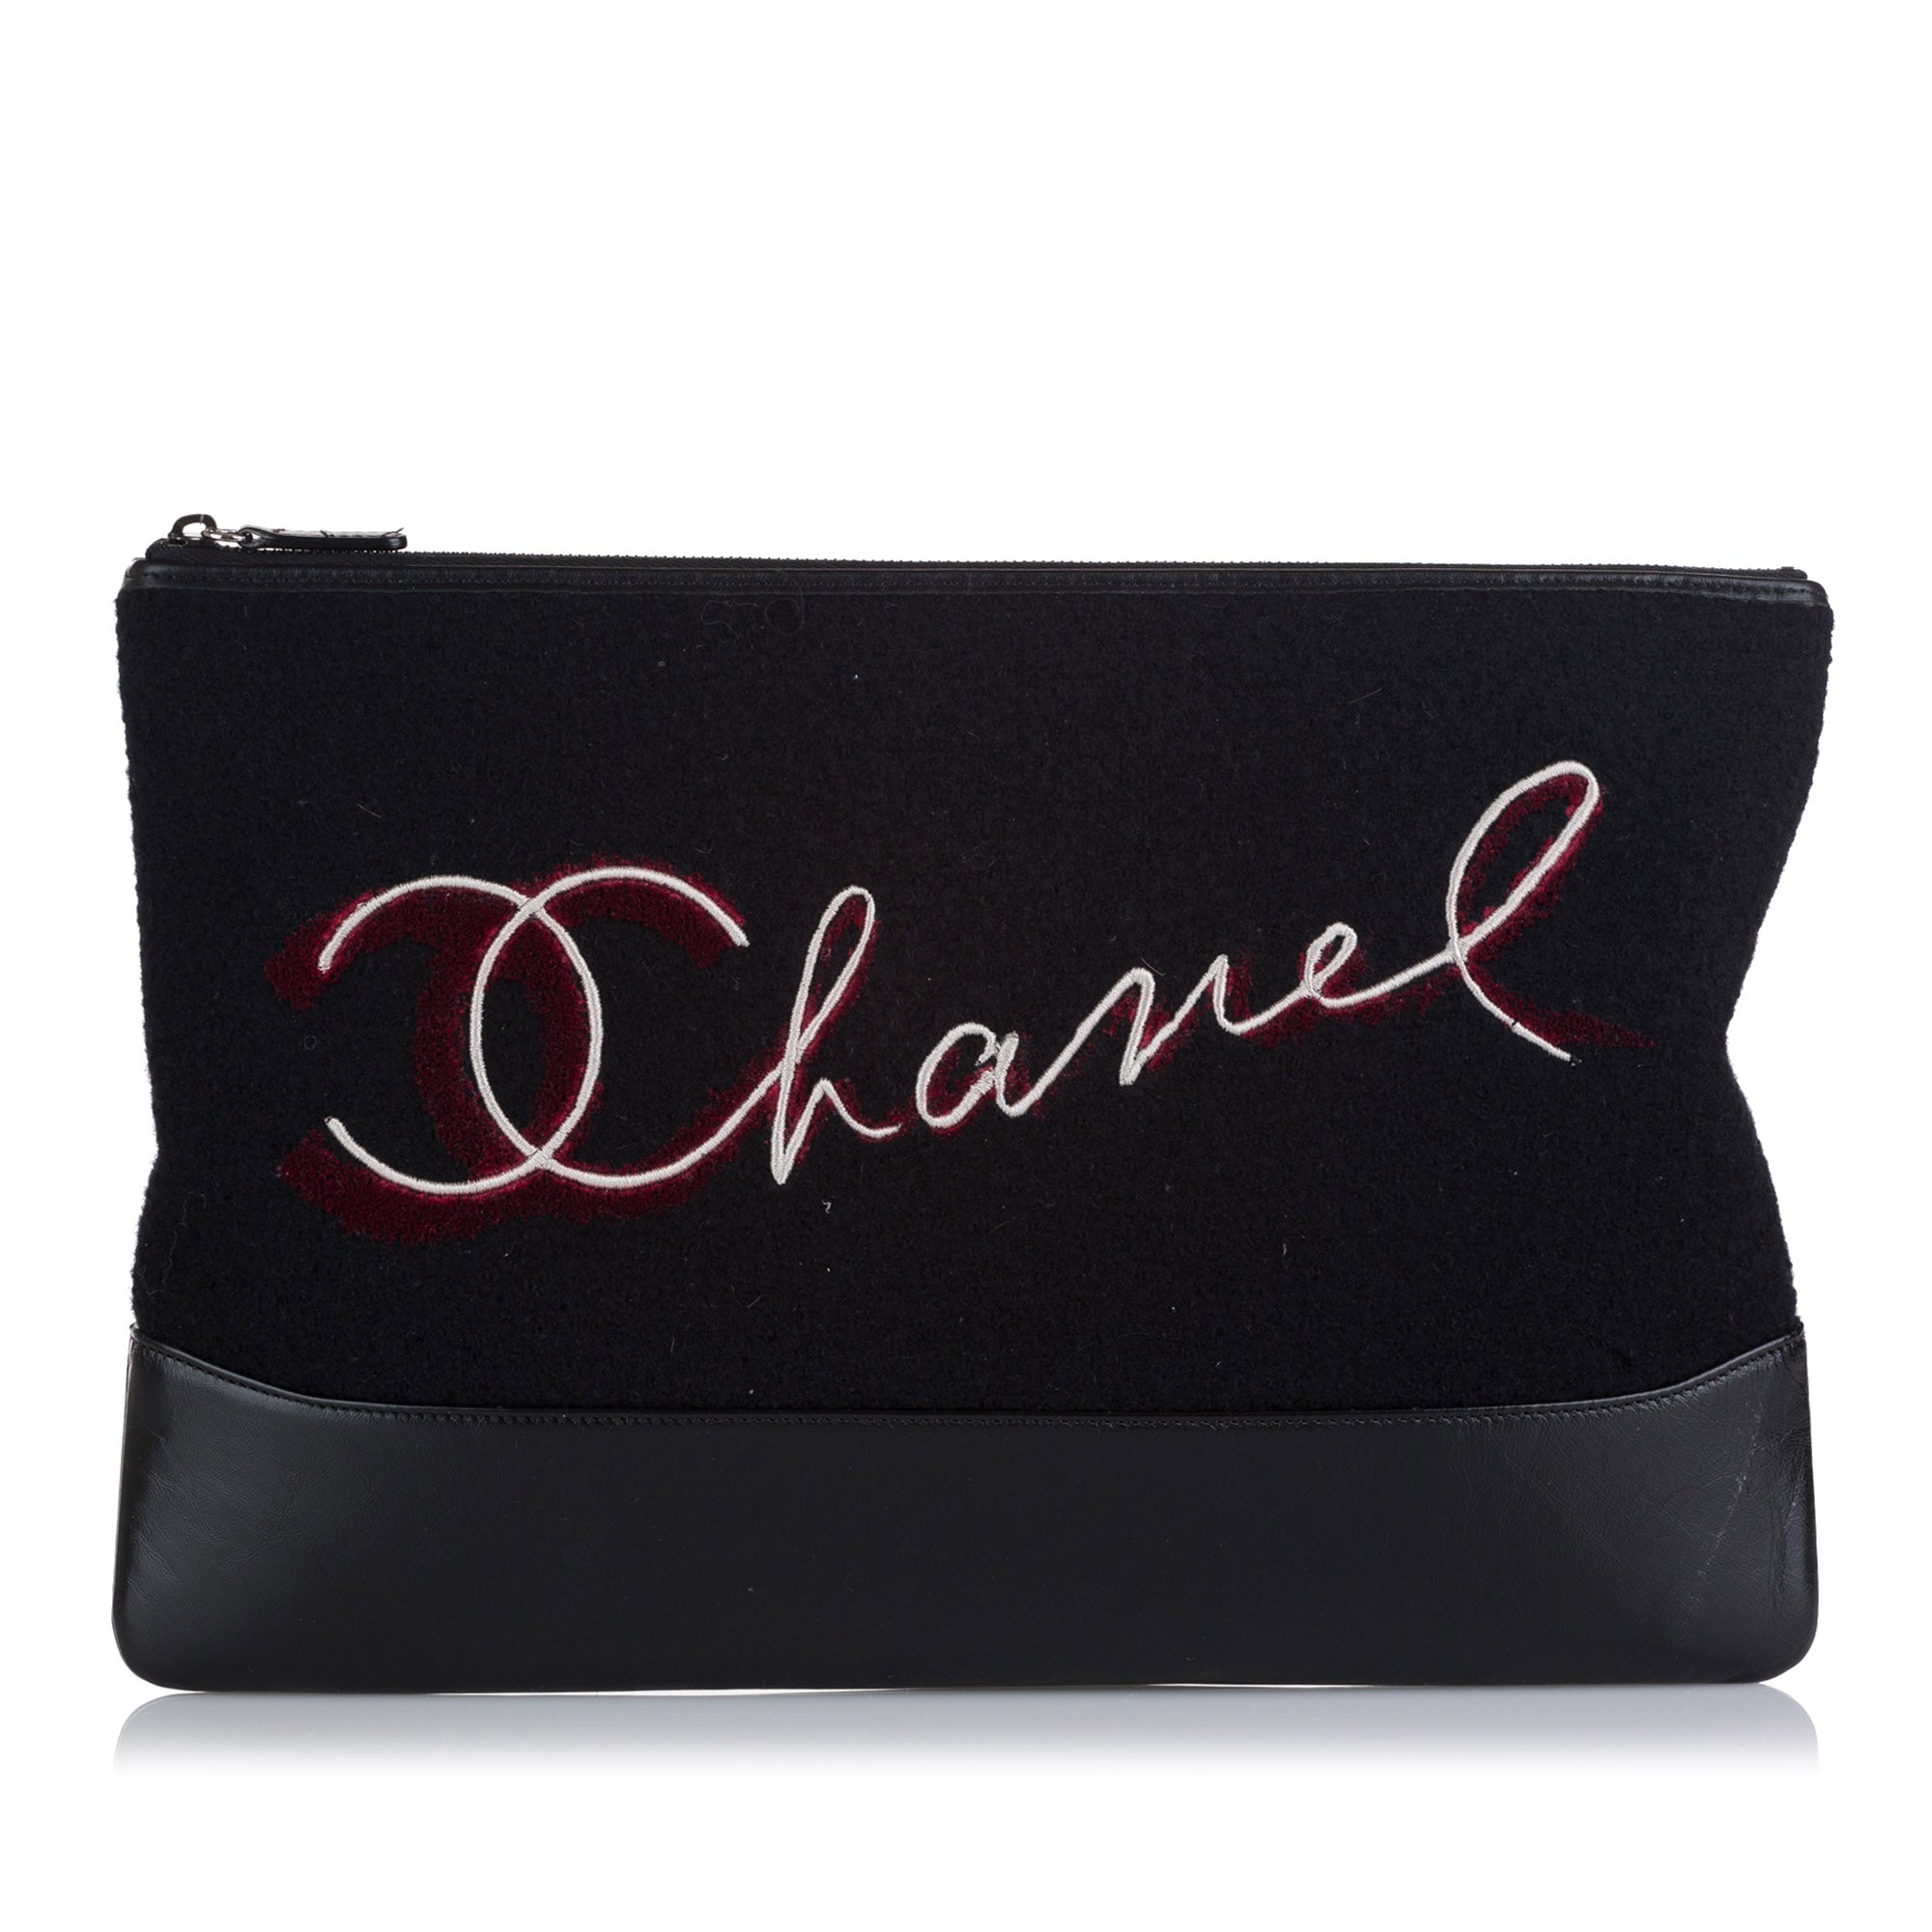 Karl Lagerfeld loves Chanel  Black Chanel Paris Salzburg Clutch